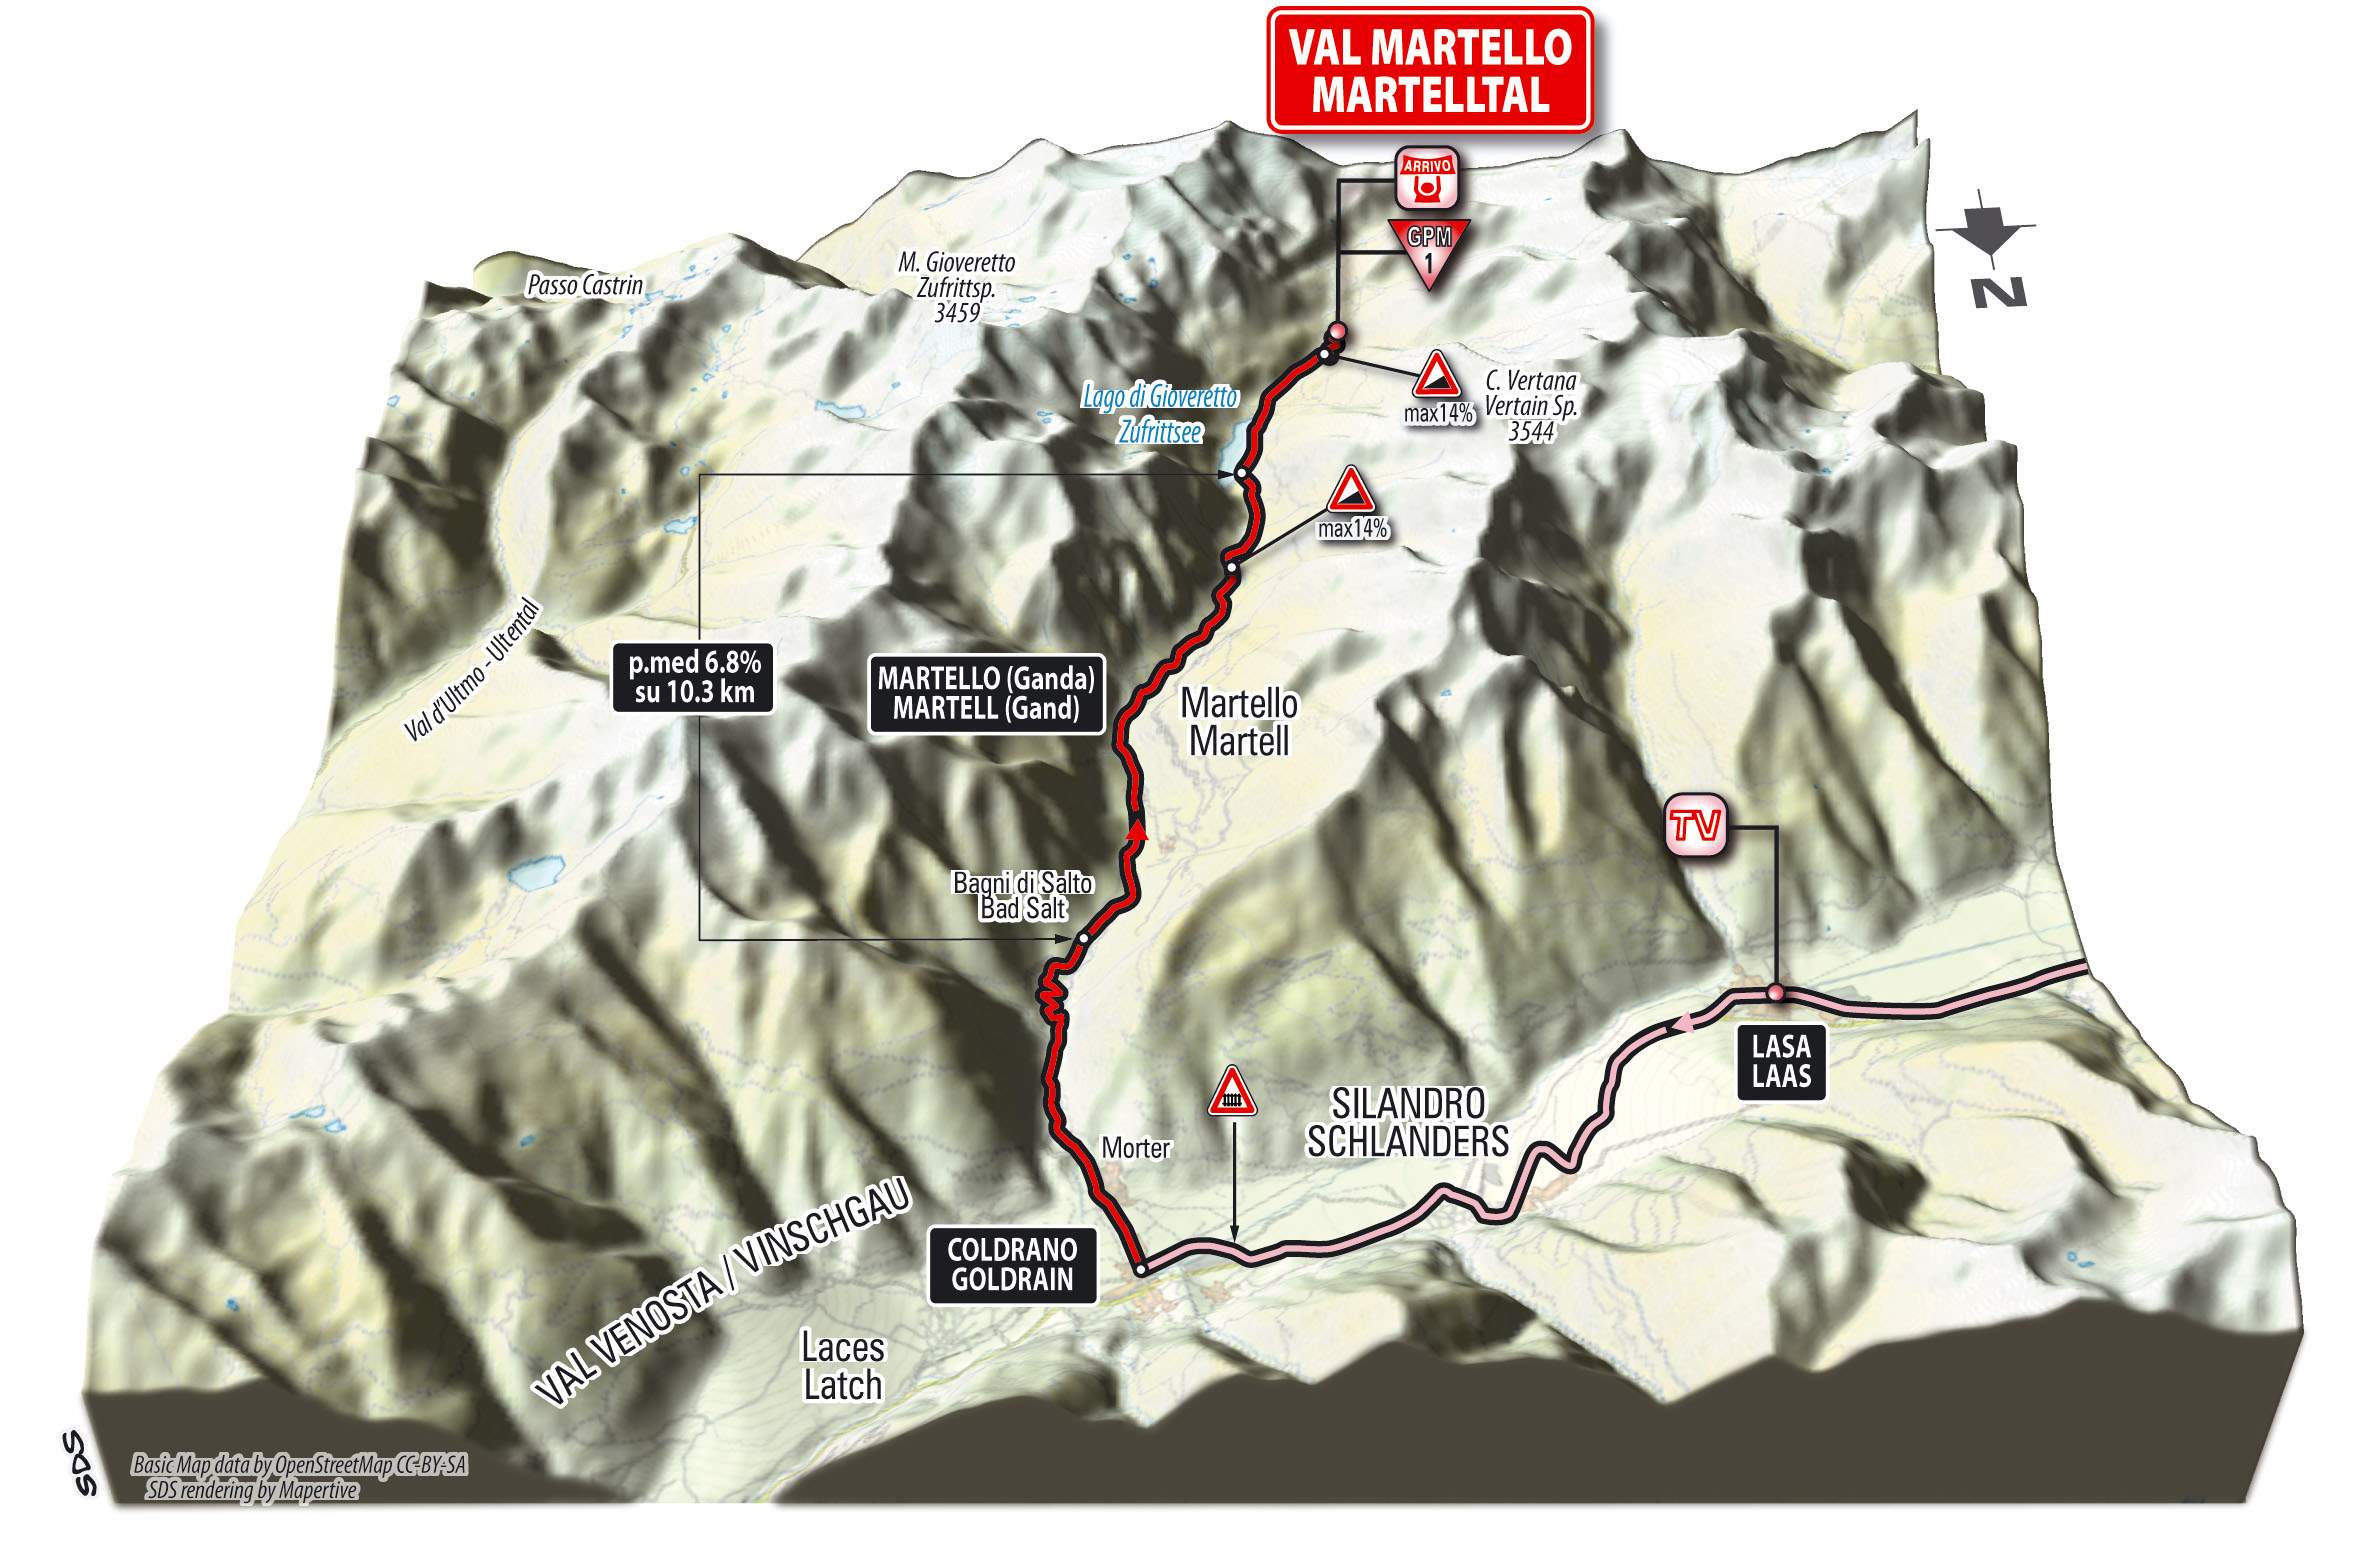 Giro d'Italia 2014 stage 16 climb details - Val Martello 3D (new)